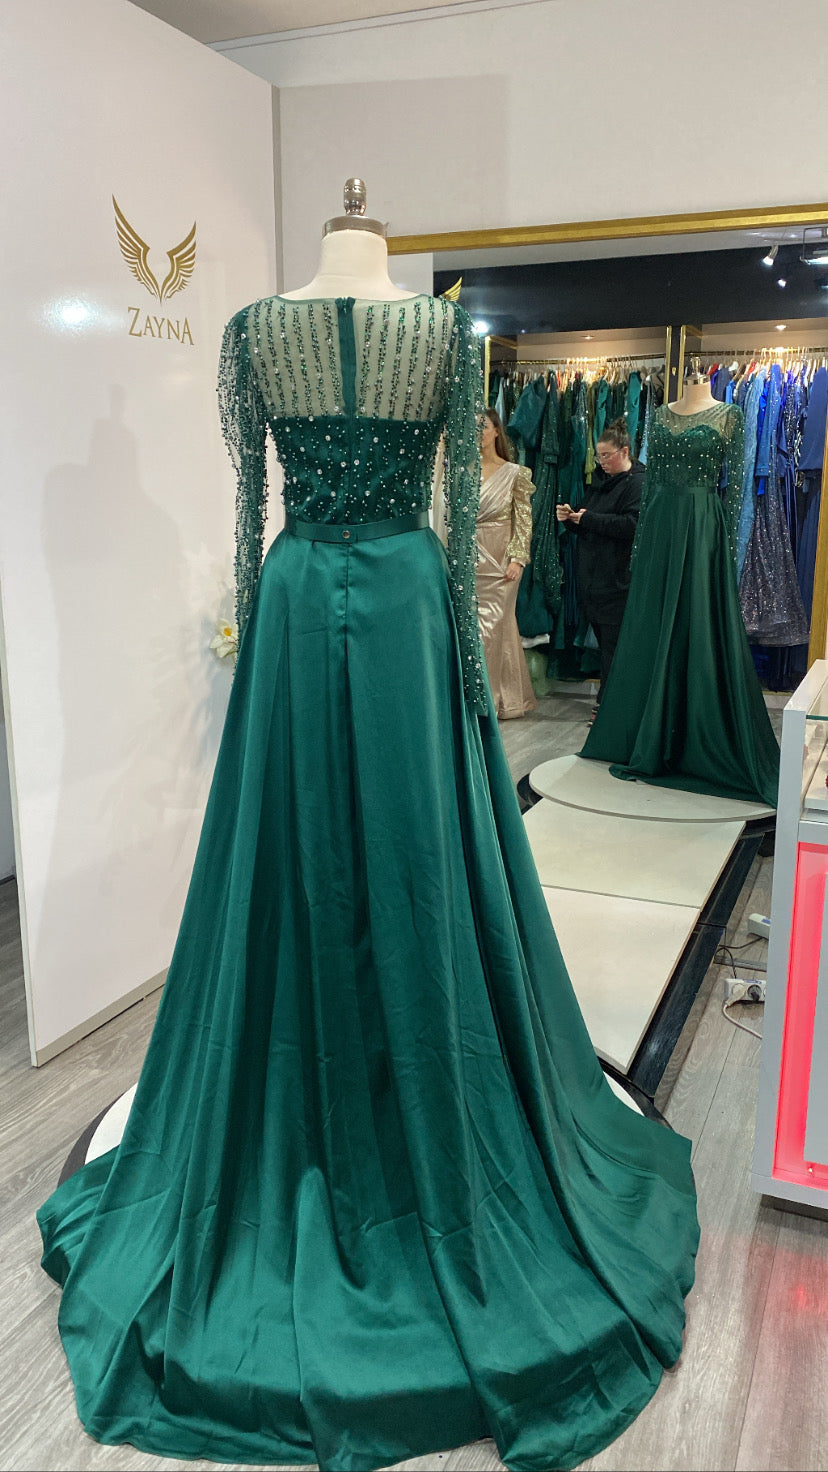 Elegant green dress satin edited